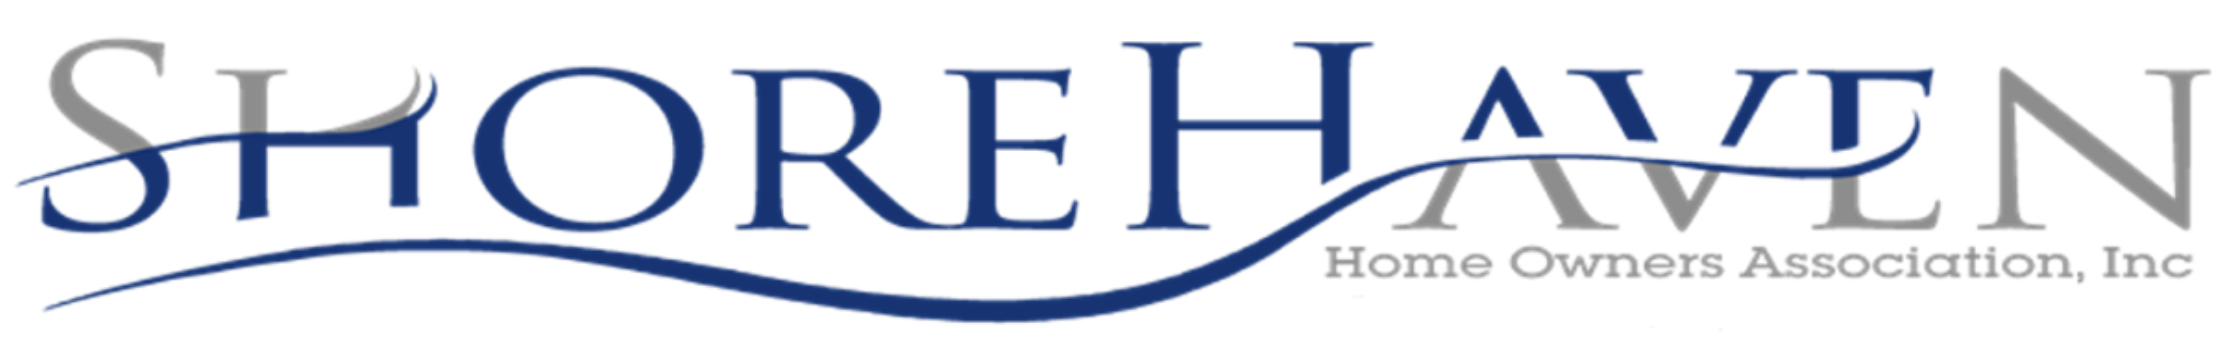 Shorehaven Home Owners Association, Inc. Logo